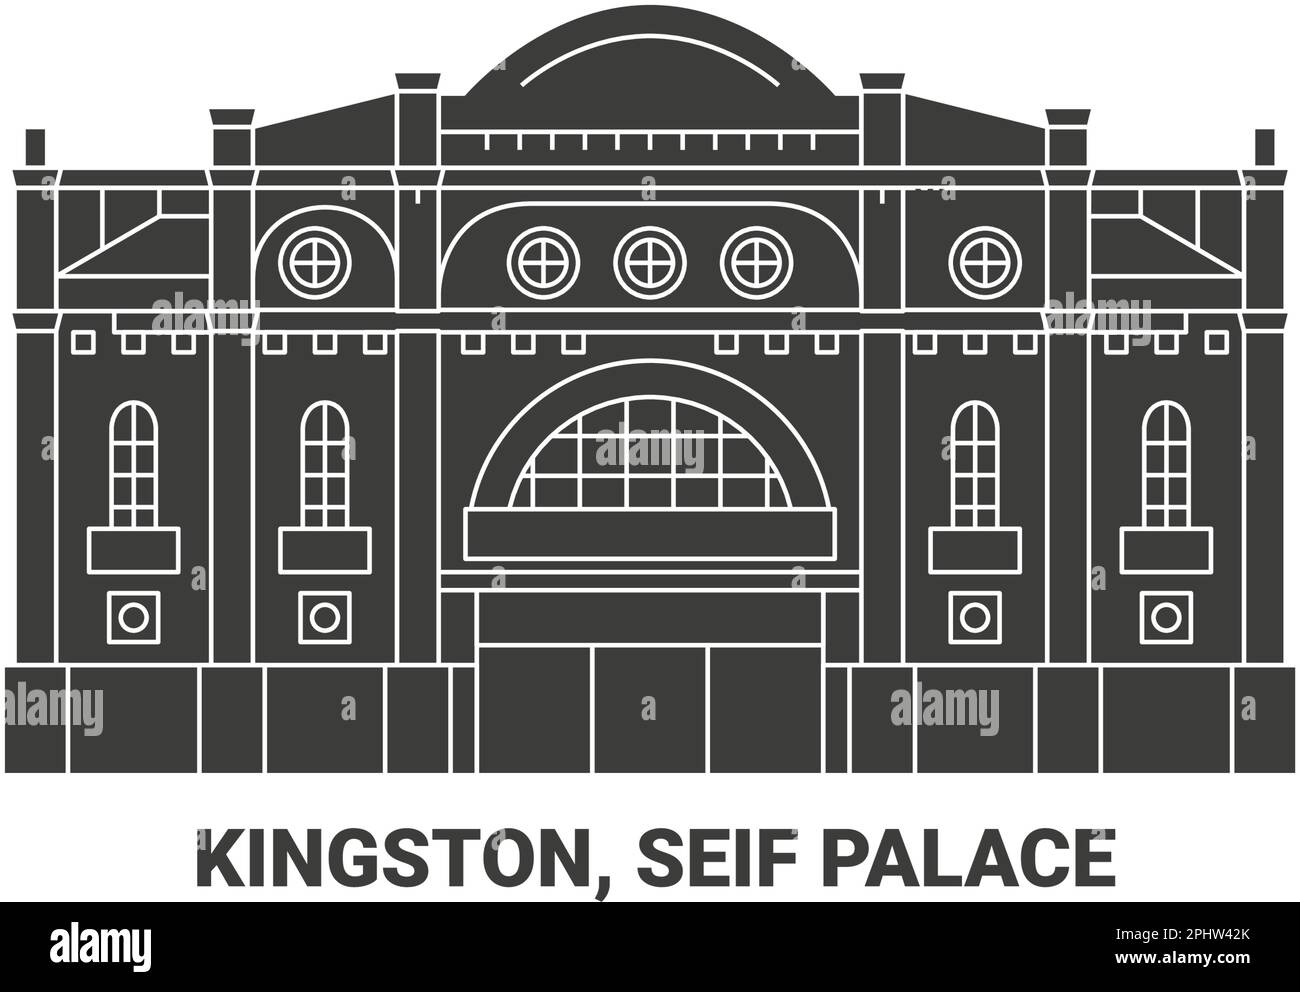 Jamaica, Kingston, Seif Palace, travel landmark vector illustration Stock Vector